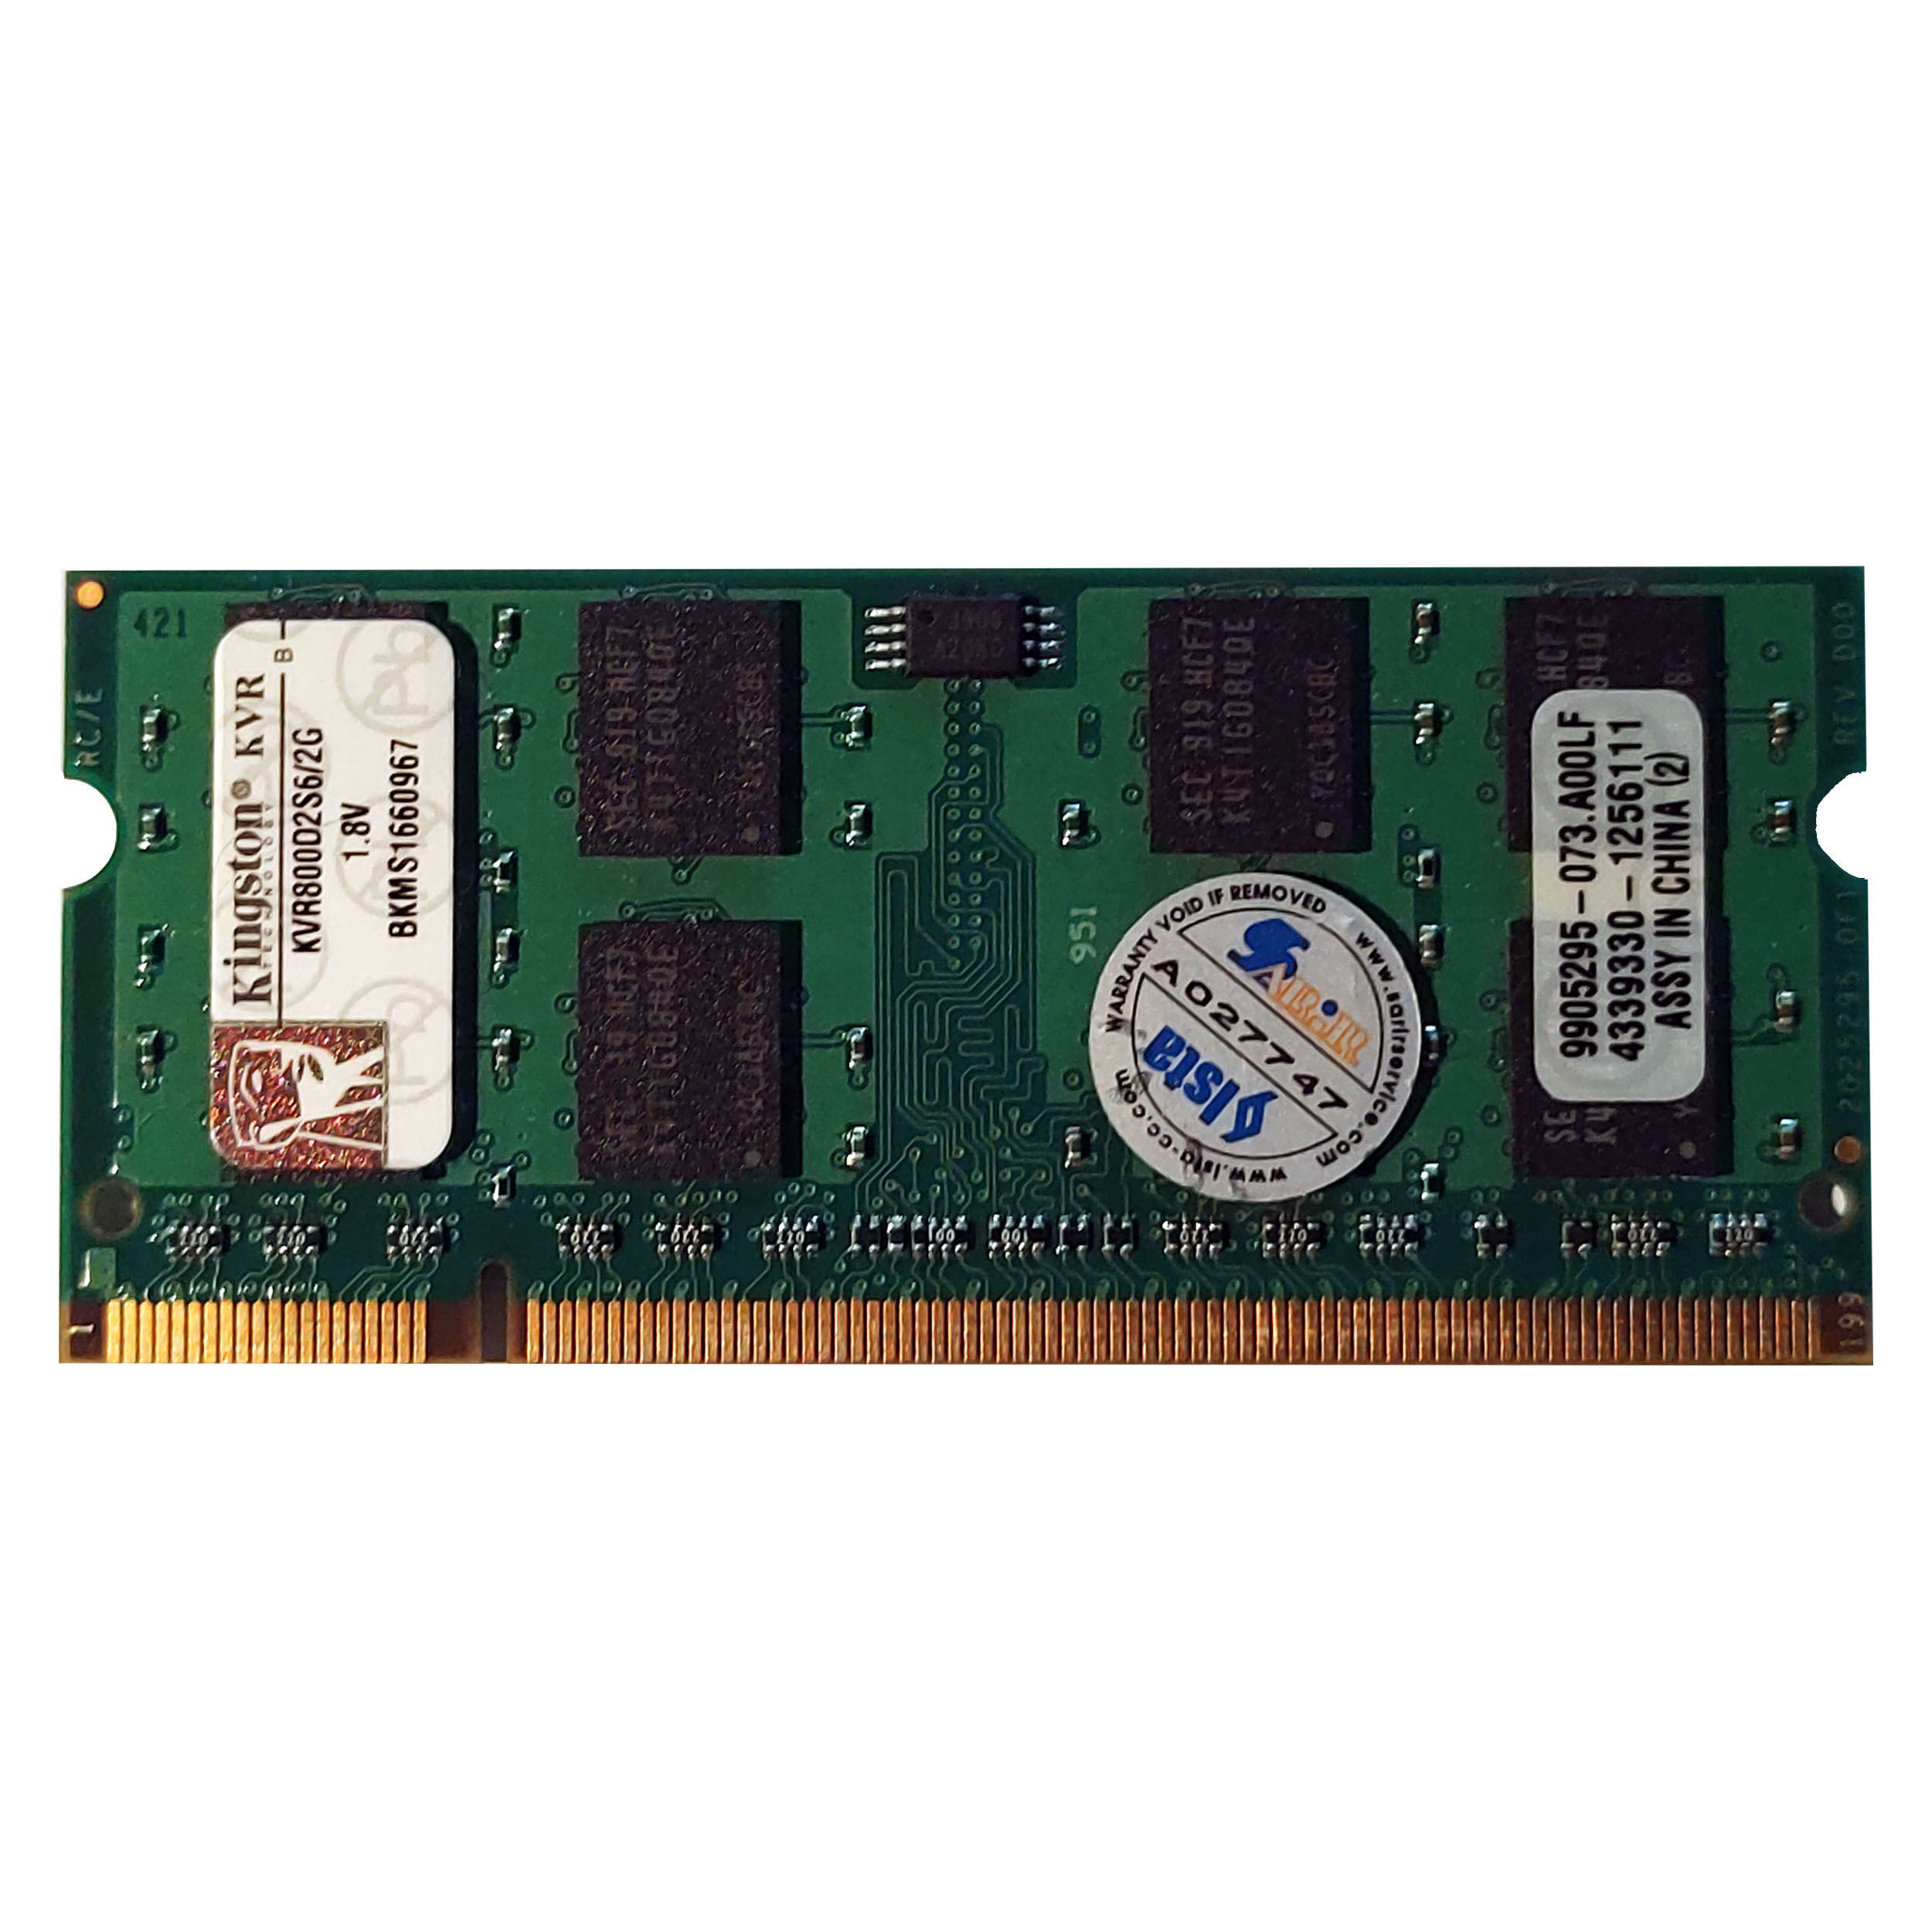 رم لپ تاپ DDR2 تک کاناله 800 مگاهرتز CL6 کینگستون مدل KVR800D2S6/2G ظرفیت 2 گیگابایت